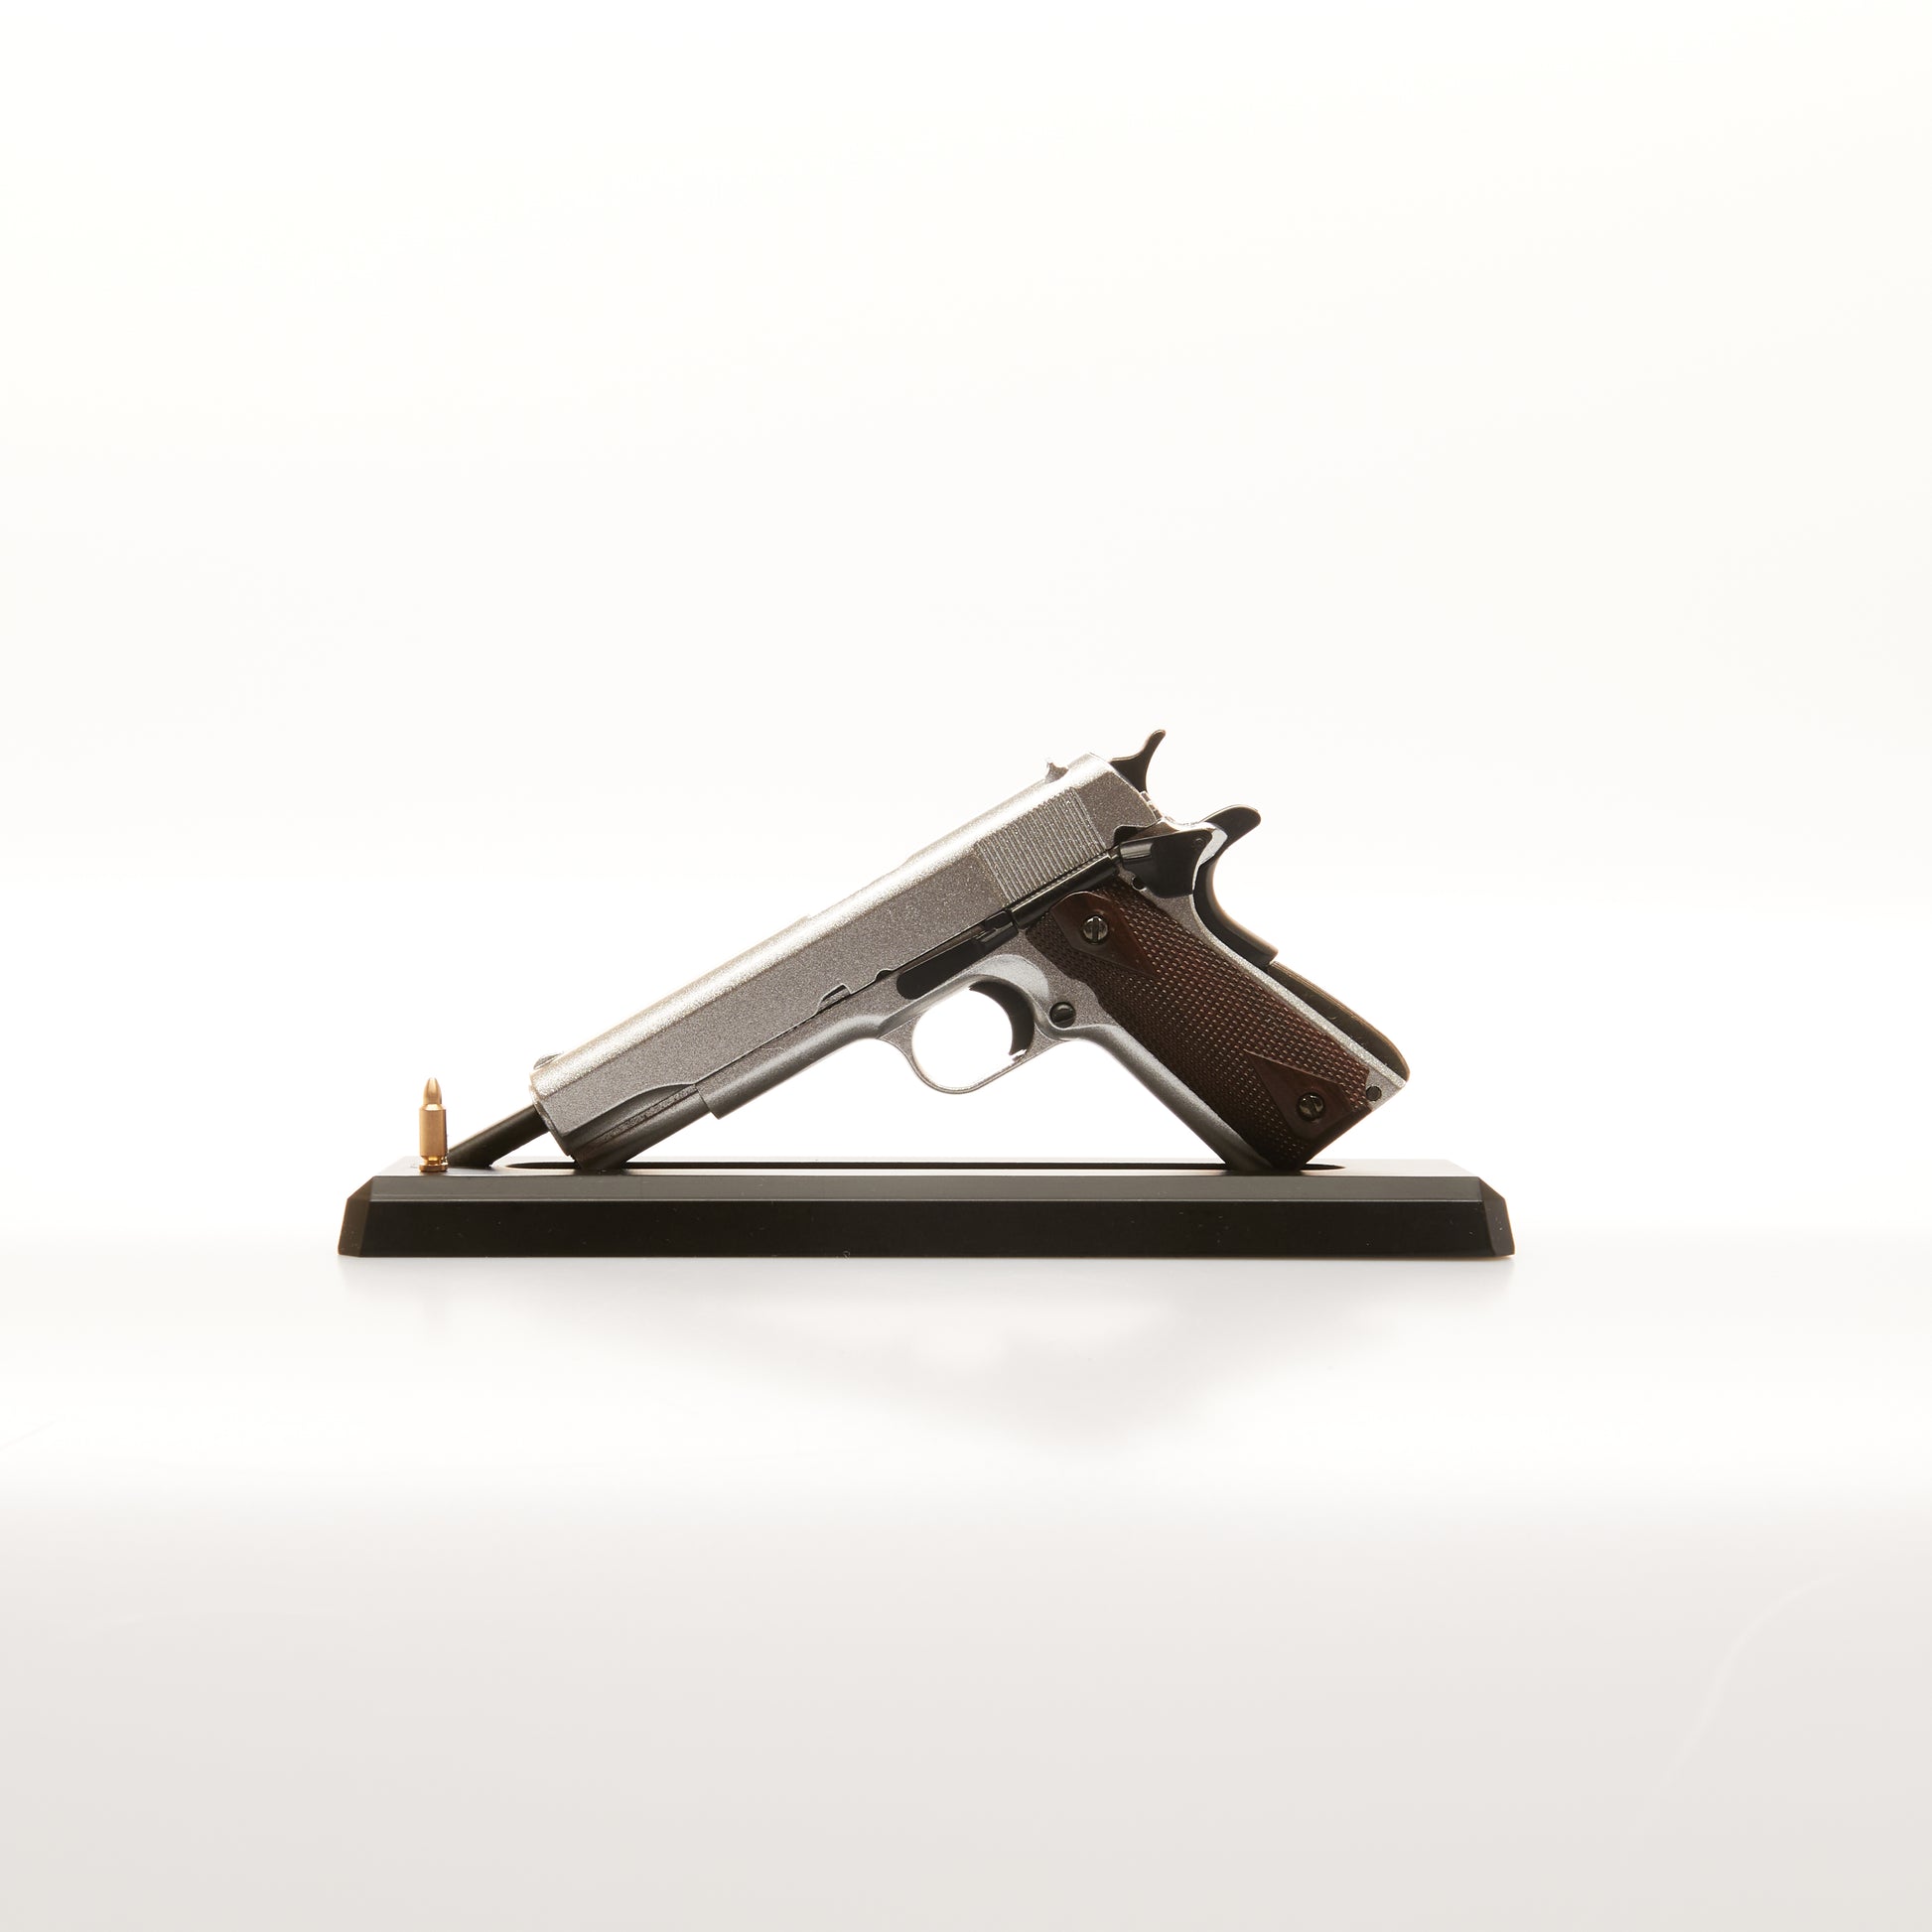 Goatguns Miniature Scale Model M1911 Pistol - Silver - Dime